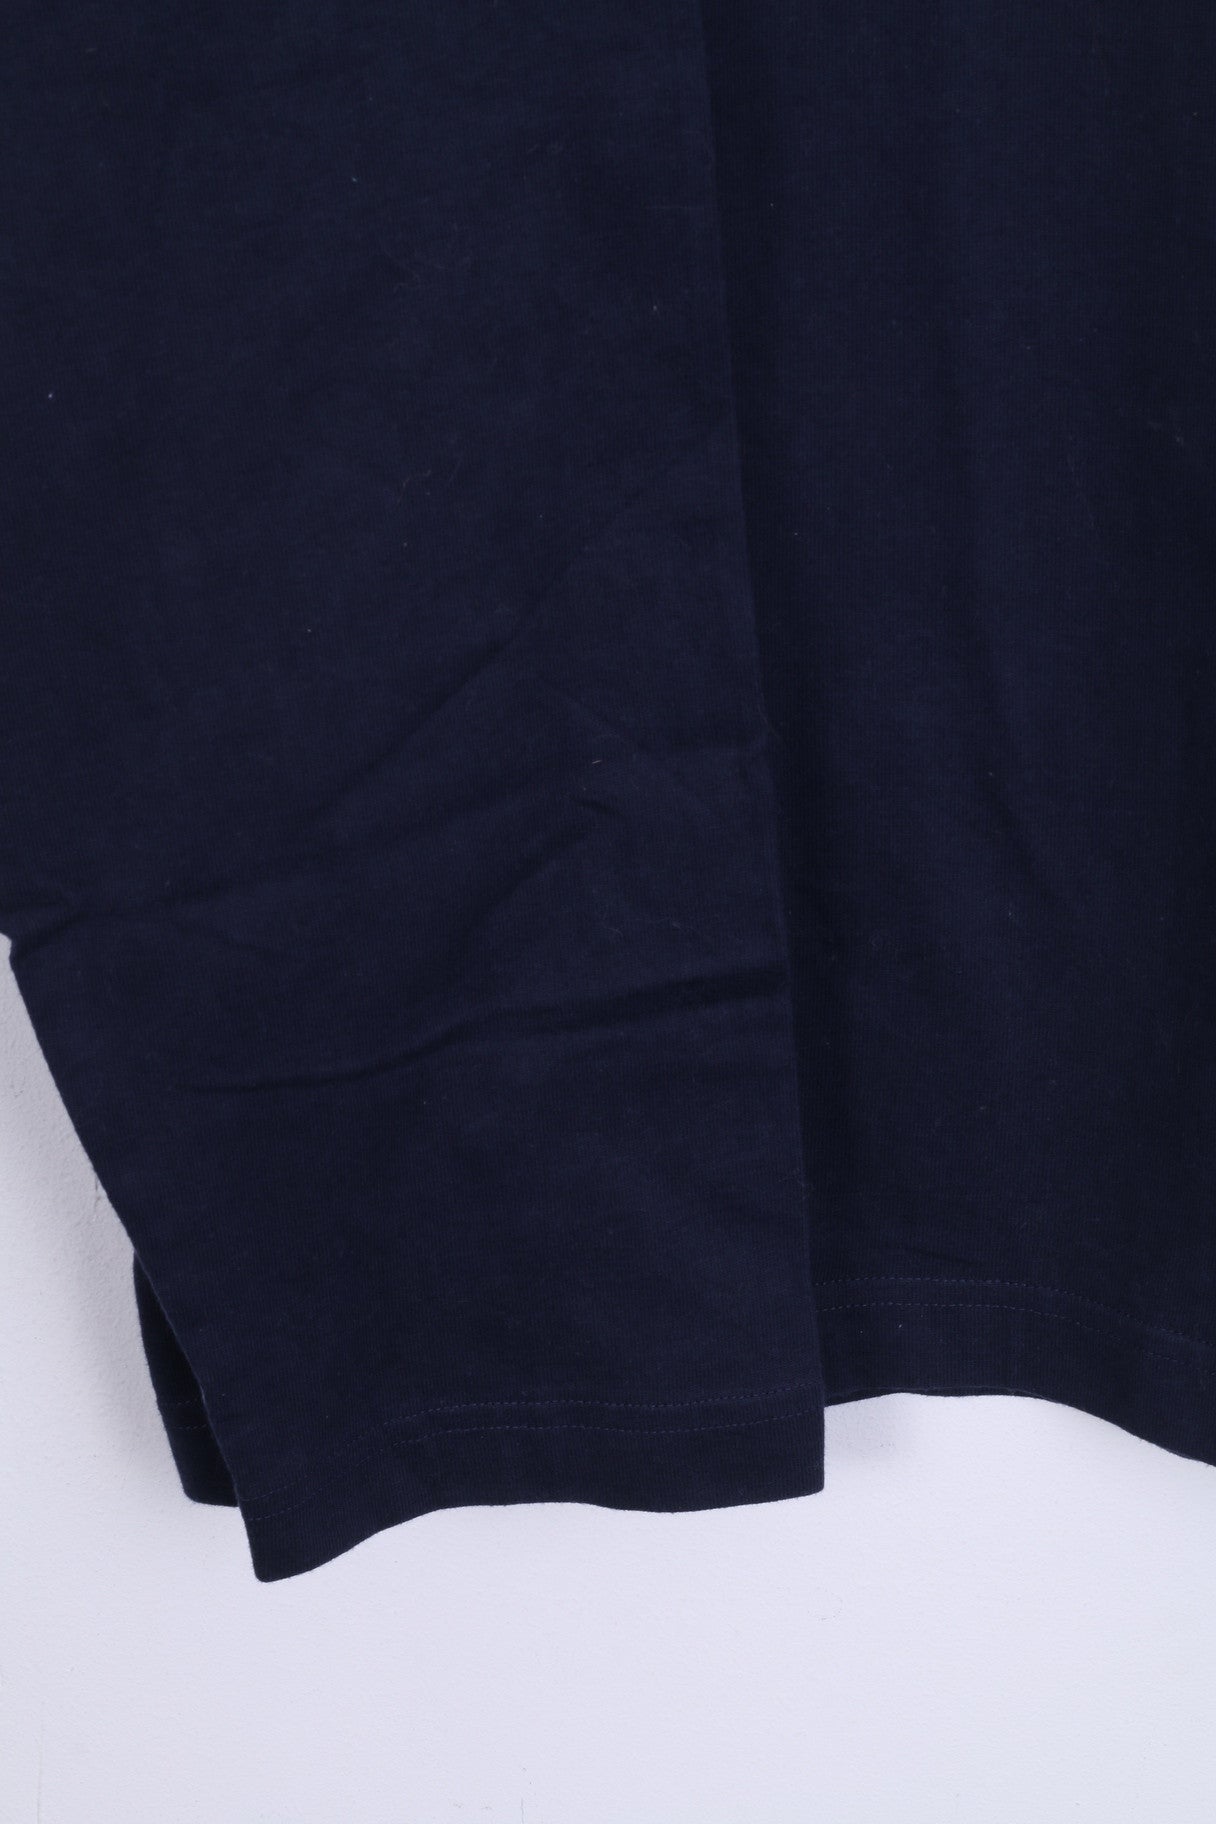 Champion Mens XL Shirt V Neck Navy Long Sleeve Cotton Top - RetrospectClothes